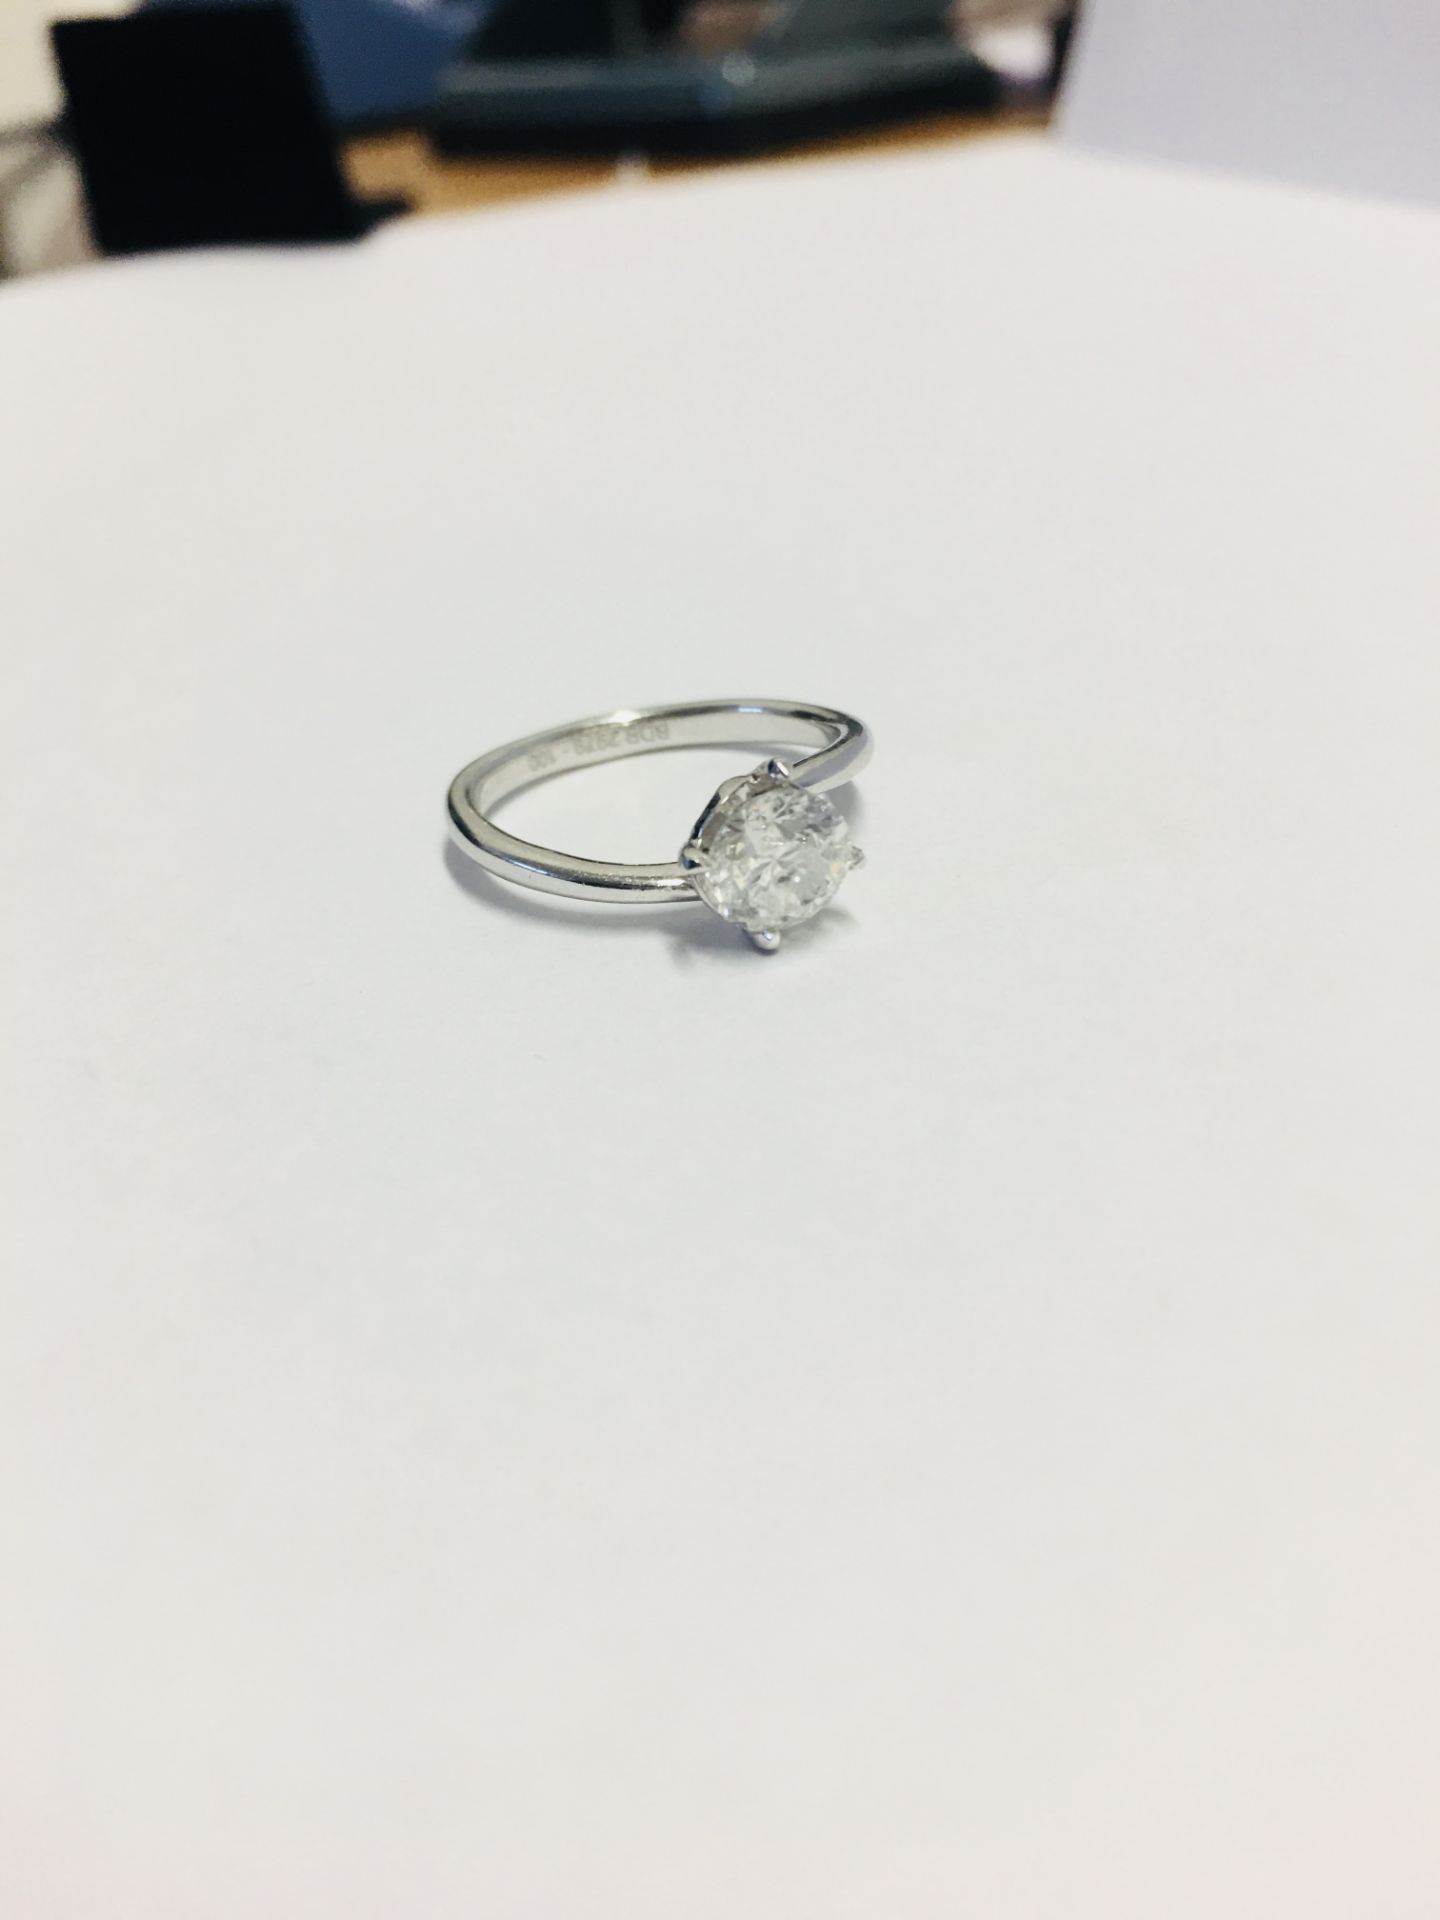 1.01ct brilliant cut diamond solitaire ring - Image 6 of 6